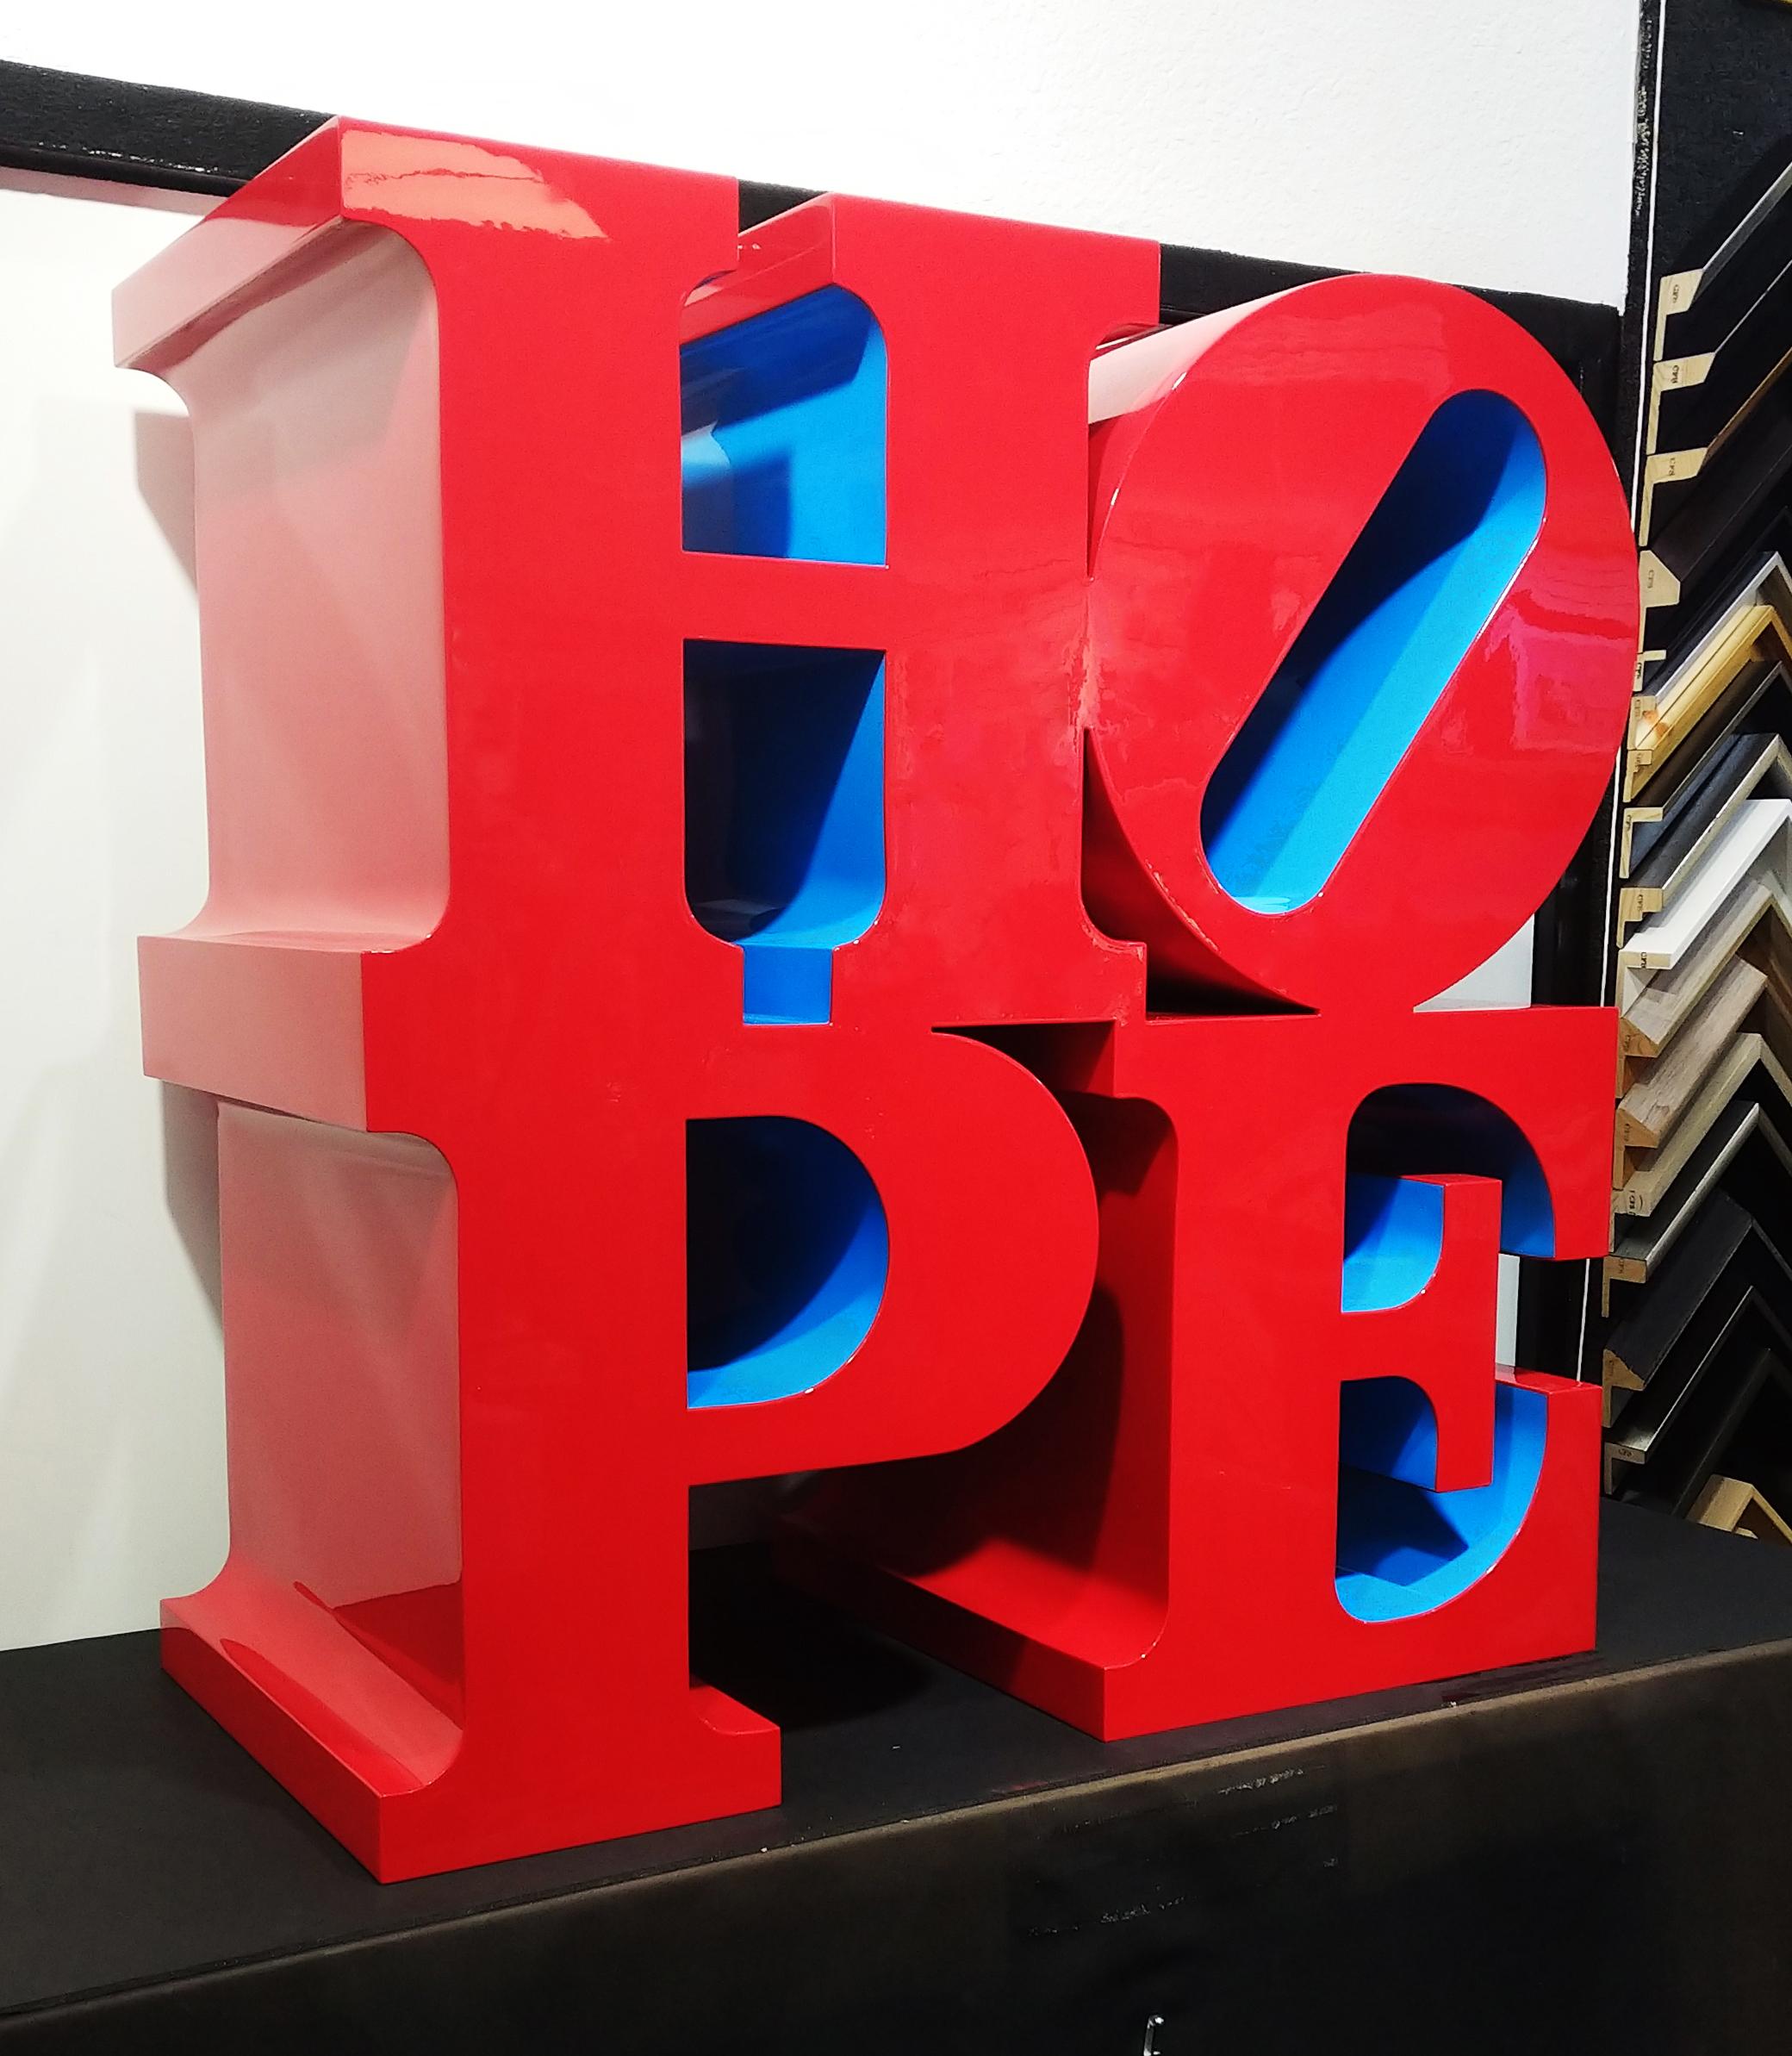 HOPE (RED/BLUE) SCULPTURE - Sculpture by Robert Indiana